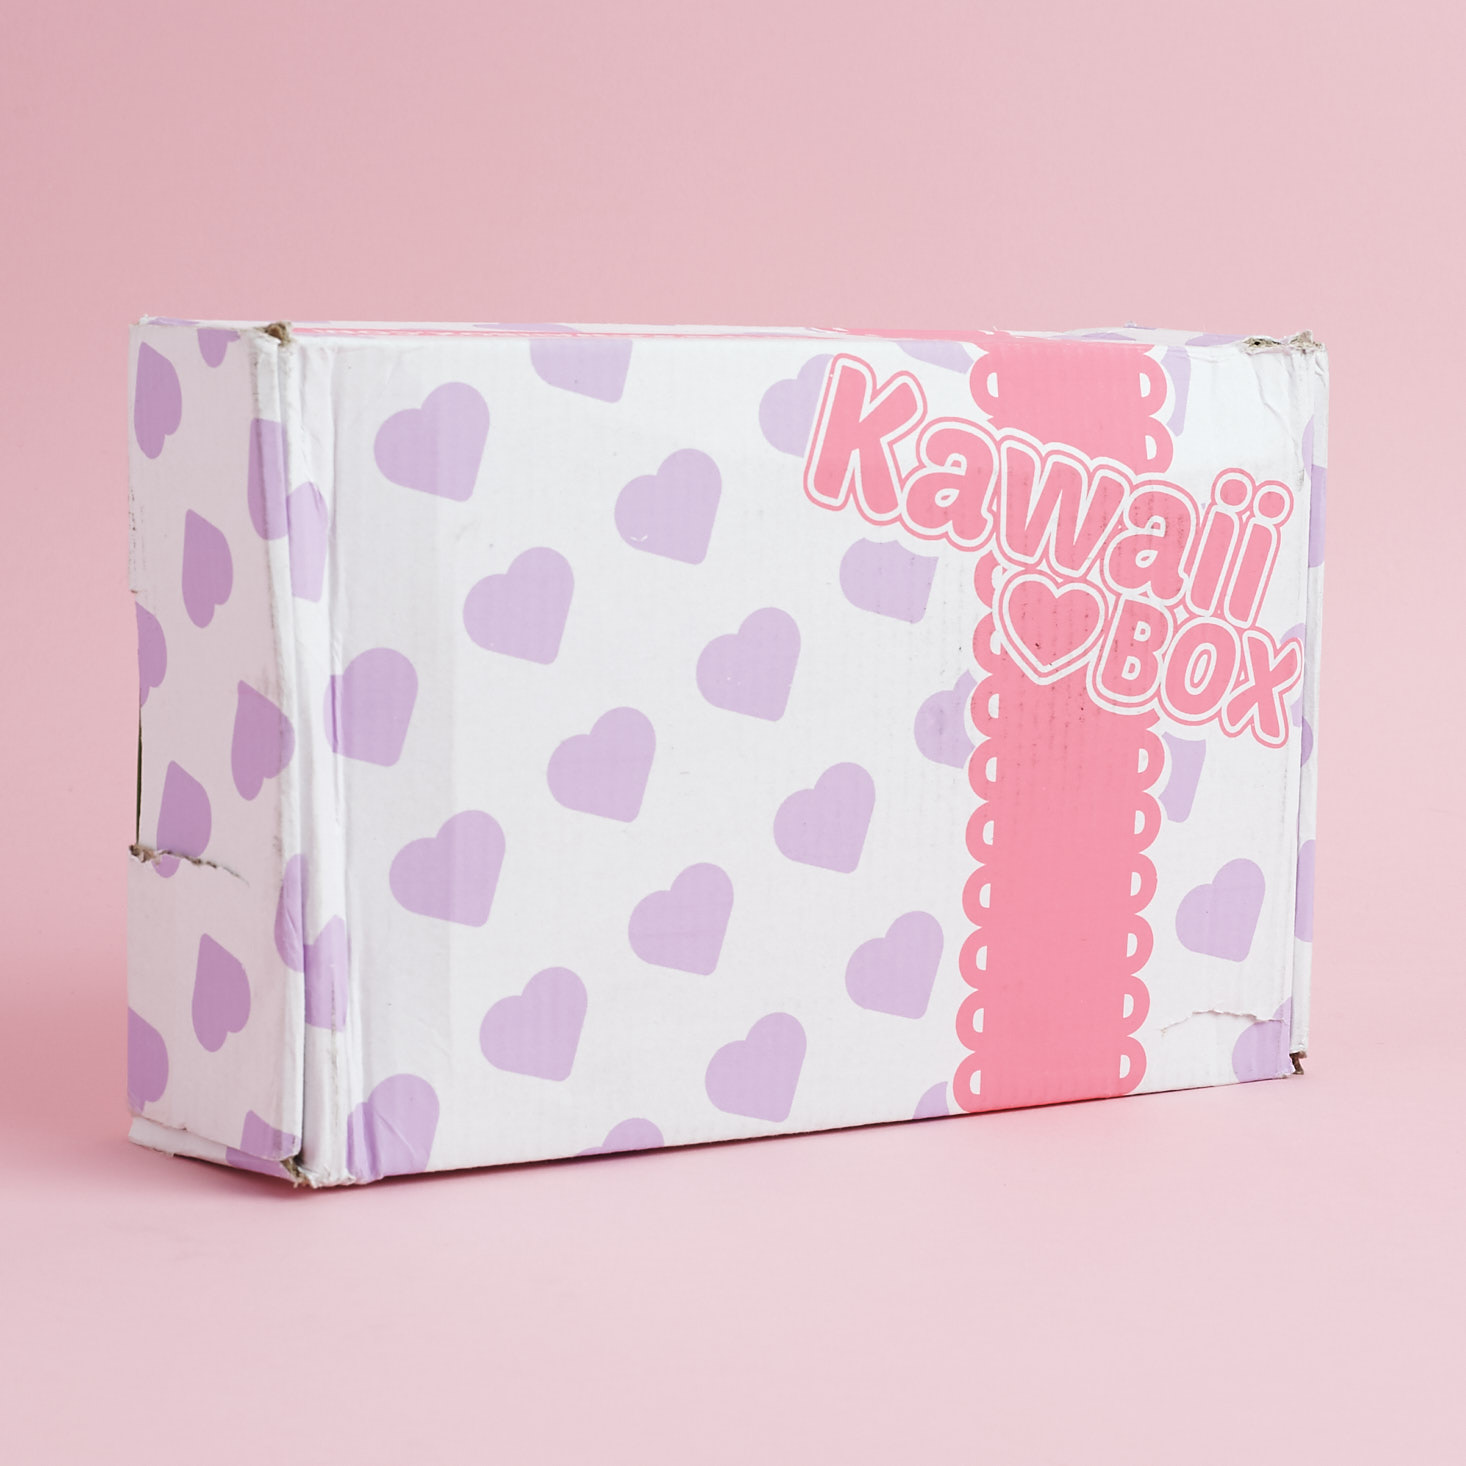 Kawaii Box Subscription Review + Coupon – September 2017